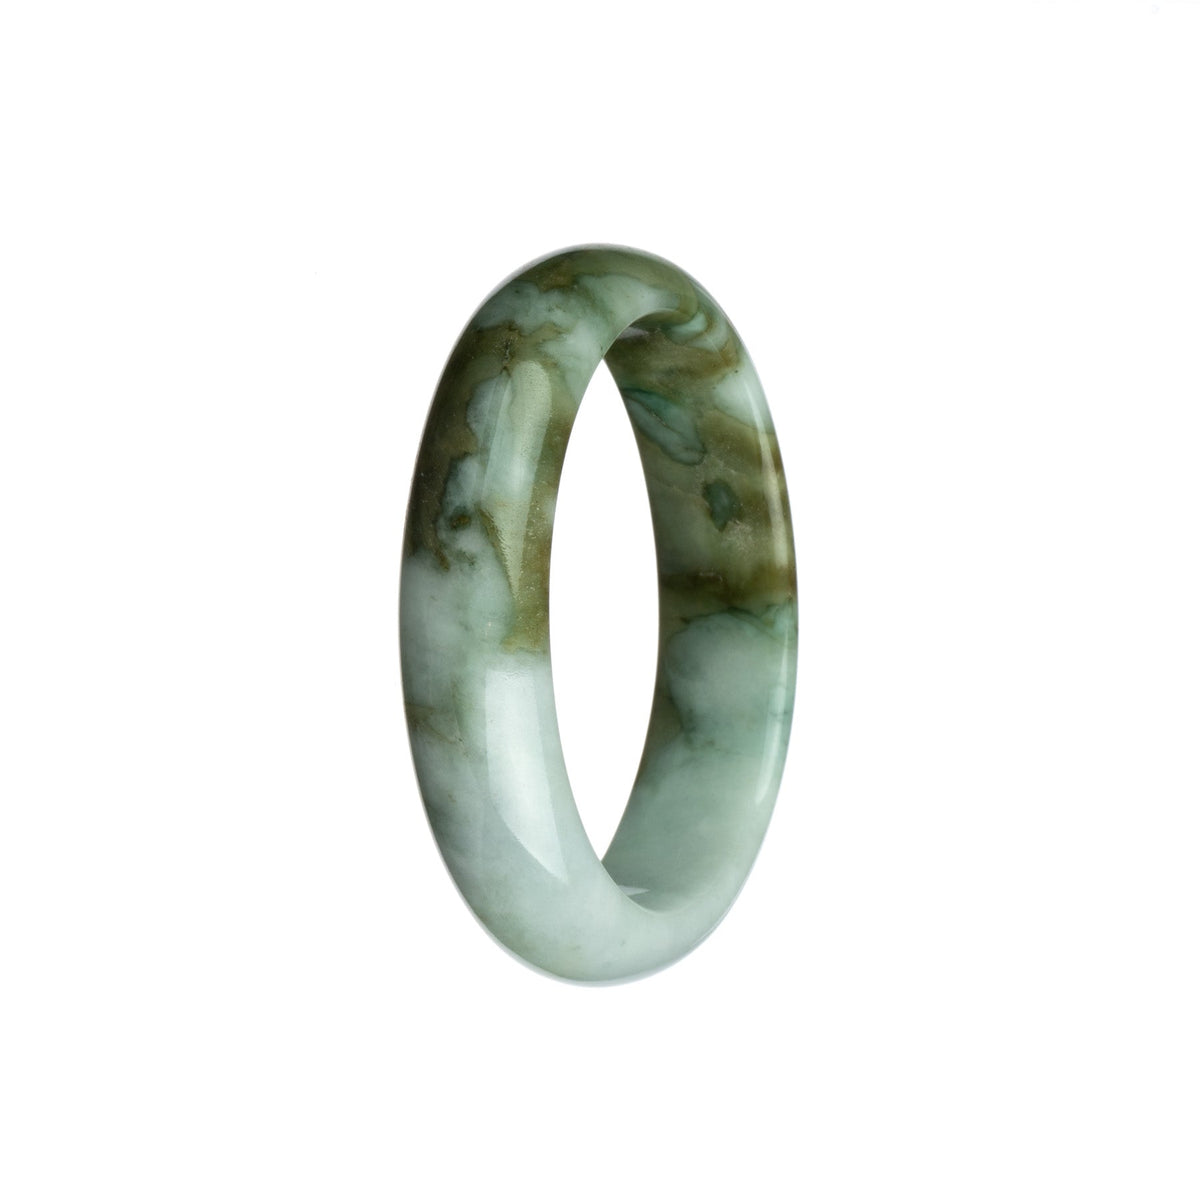 Genuine Untreated Olive Green with White Jadeite Jade Bangle Bracelet - 55mm Half Moon